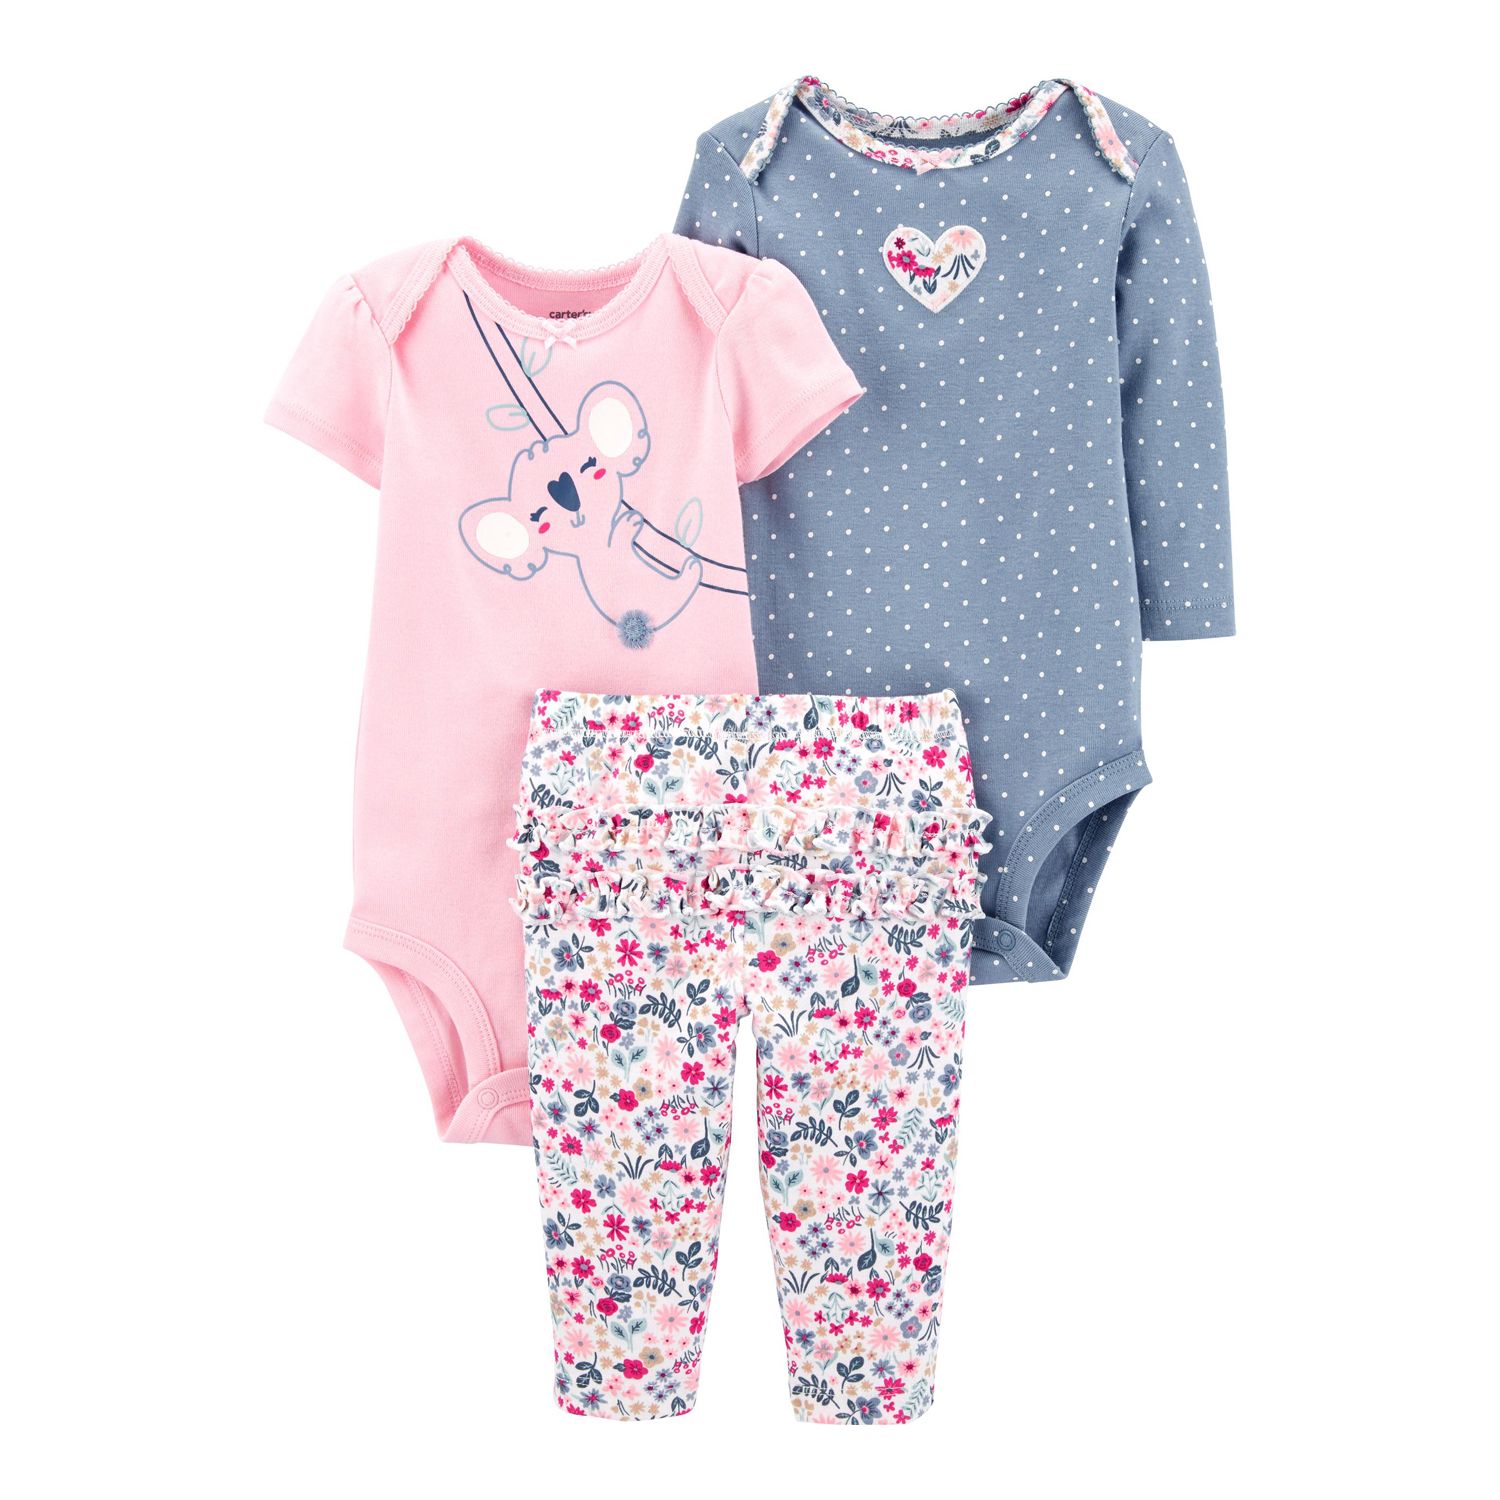 Girls Preemie Baby Clothing Sets 